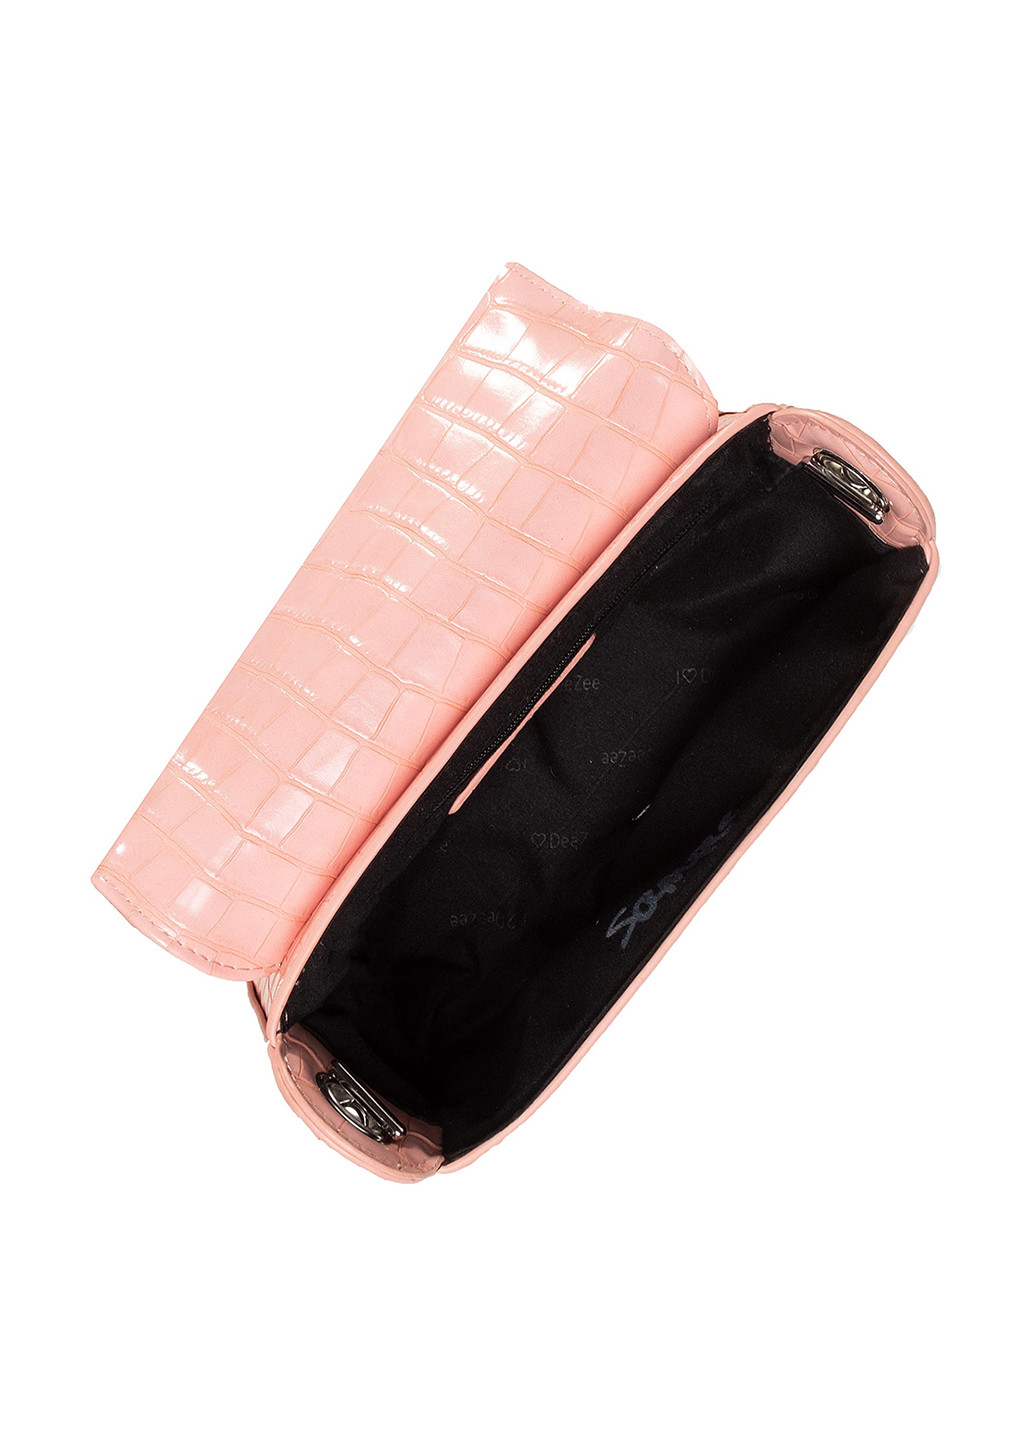 Сумка з ремінцем DeeZee RX5073 кросс боди однотонная светло-розовая кэжуал